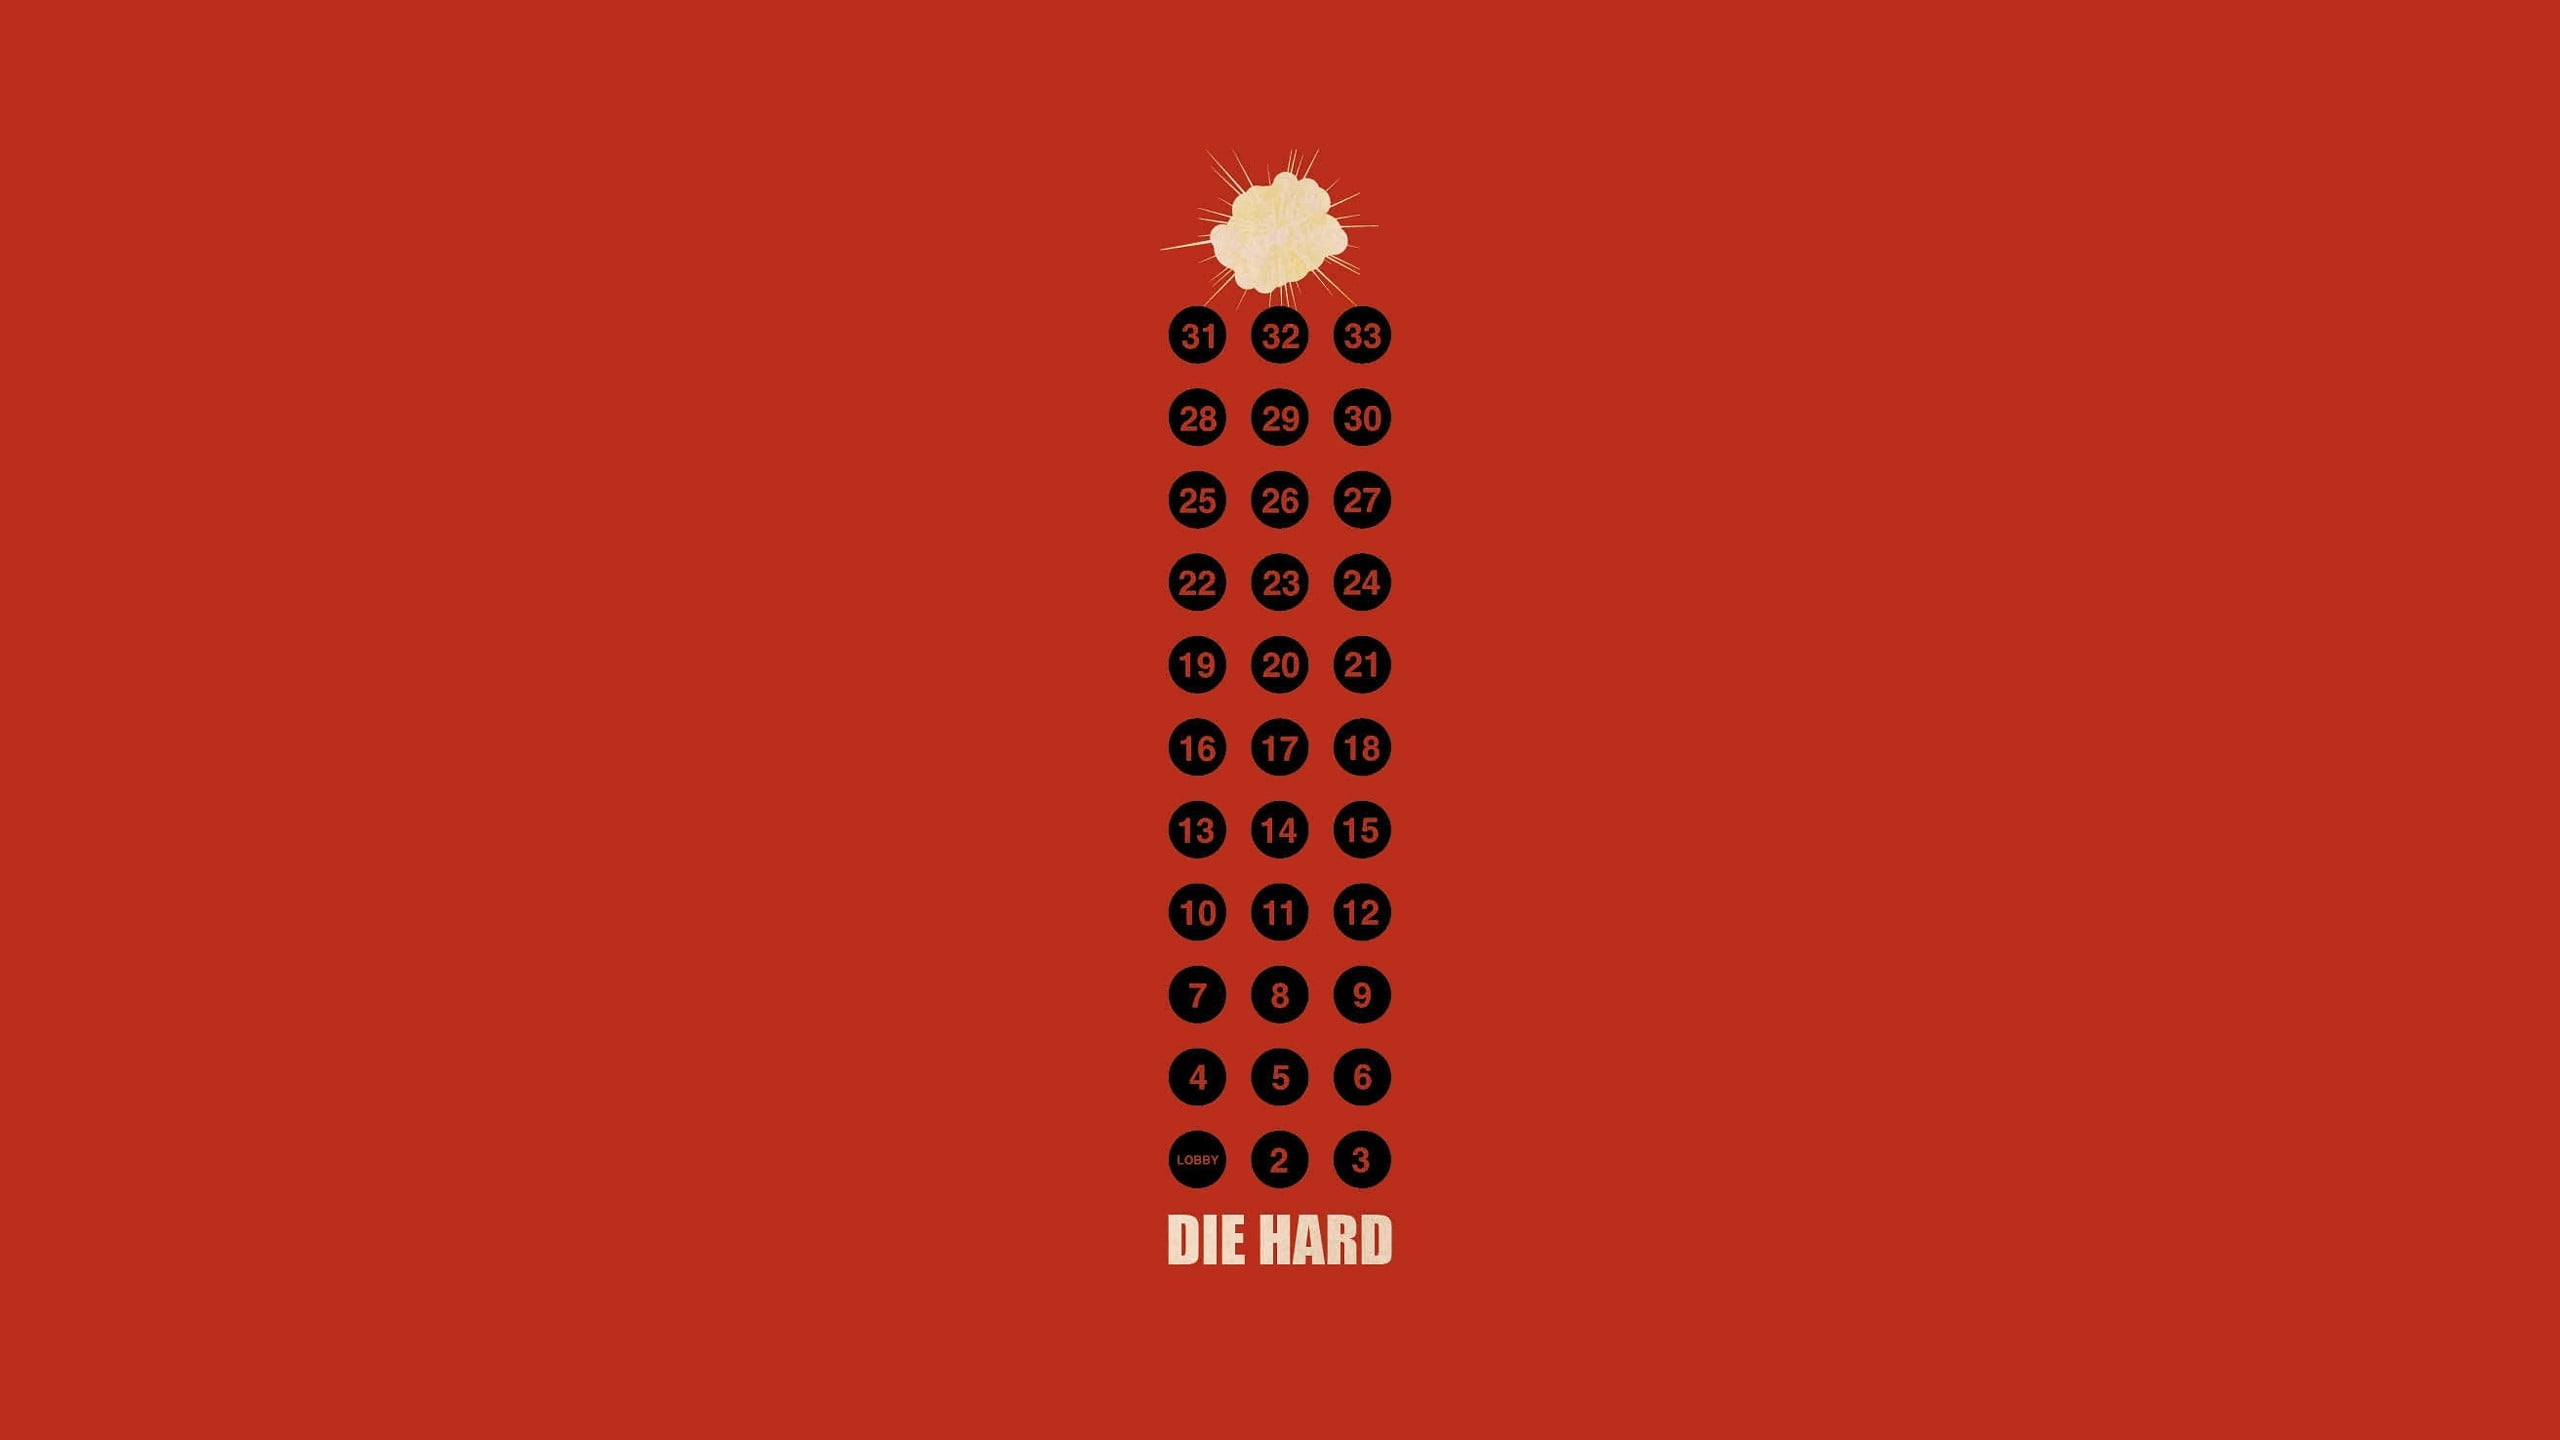 Die Hard, movies, artwork, minimalism, red, studio shot, colored background